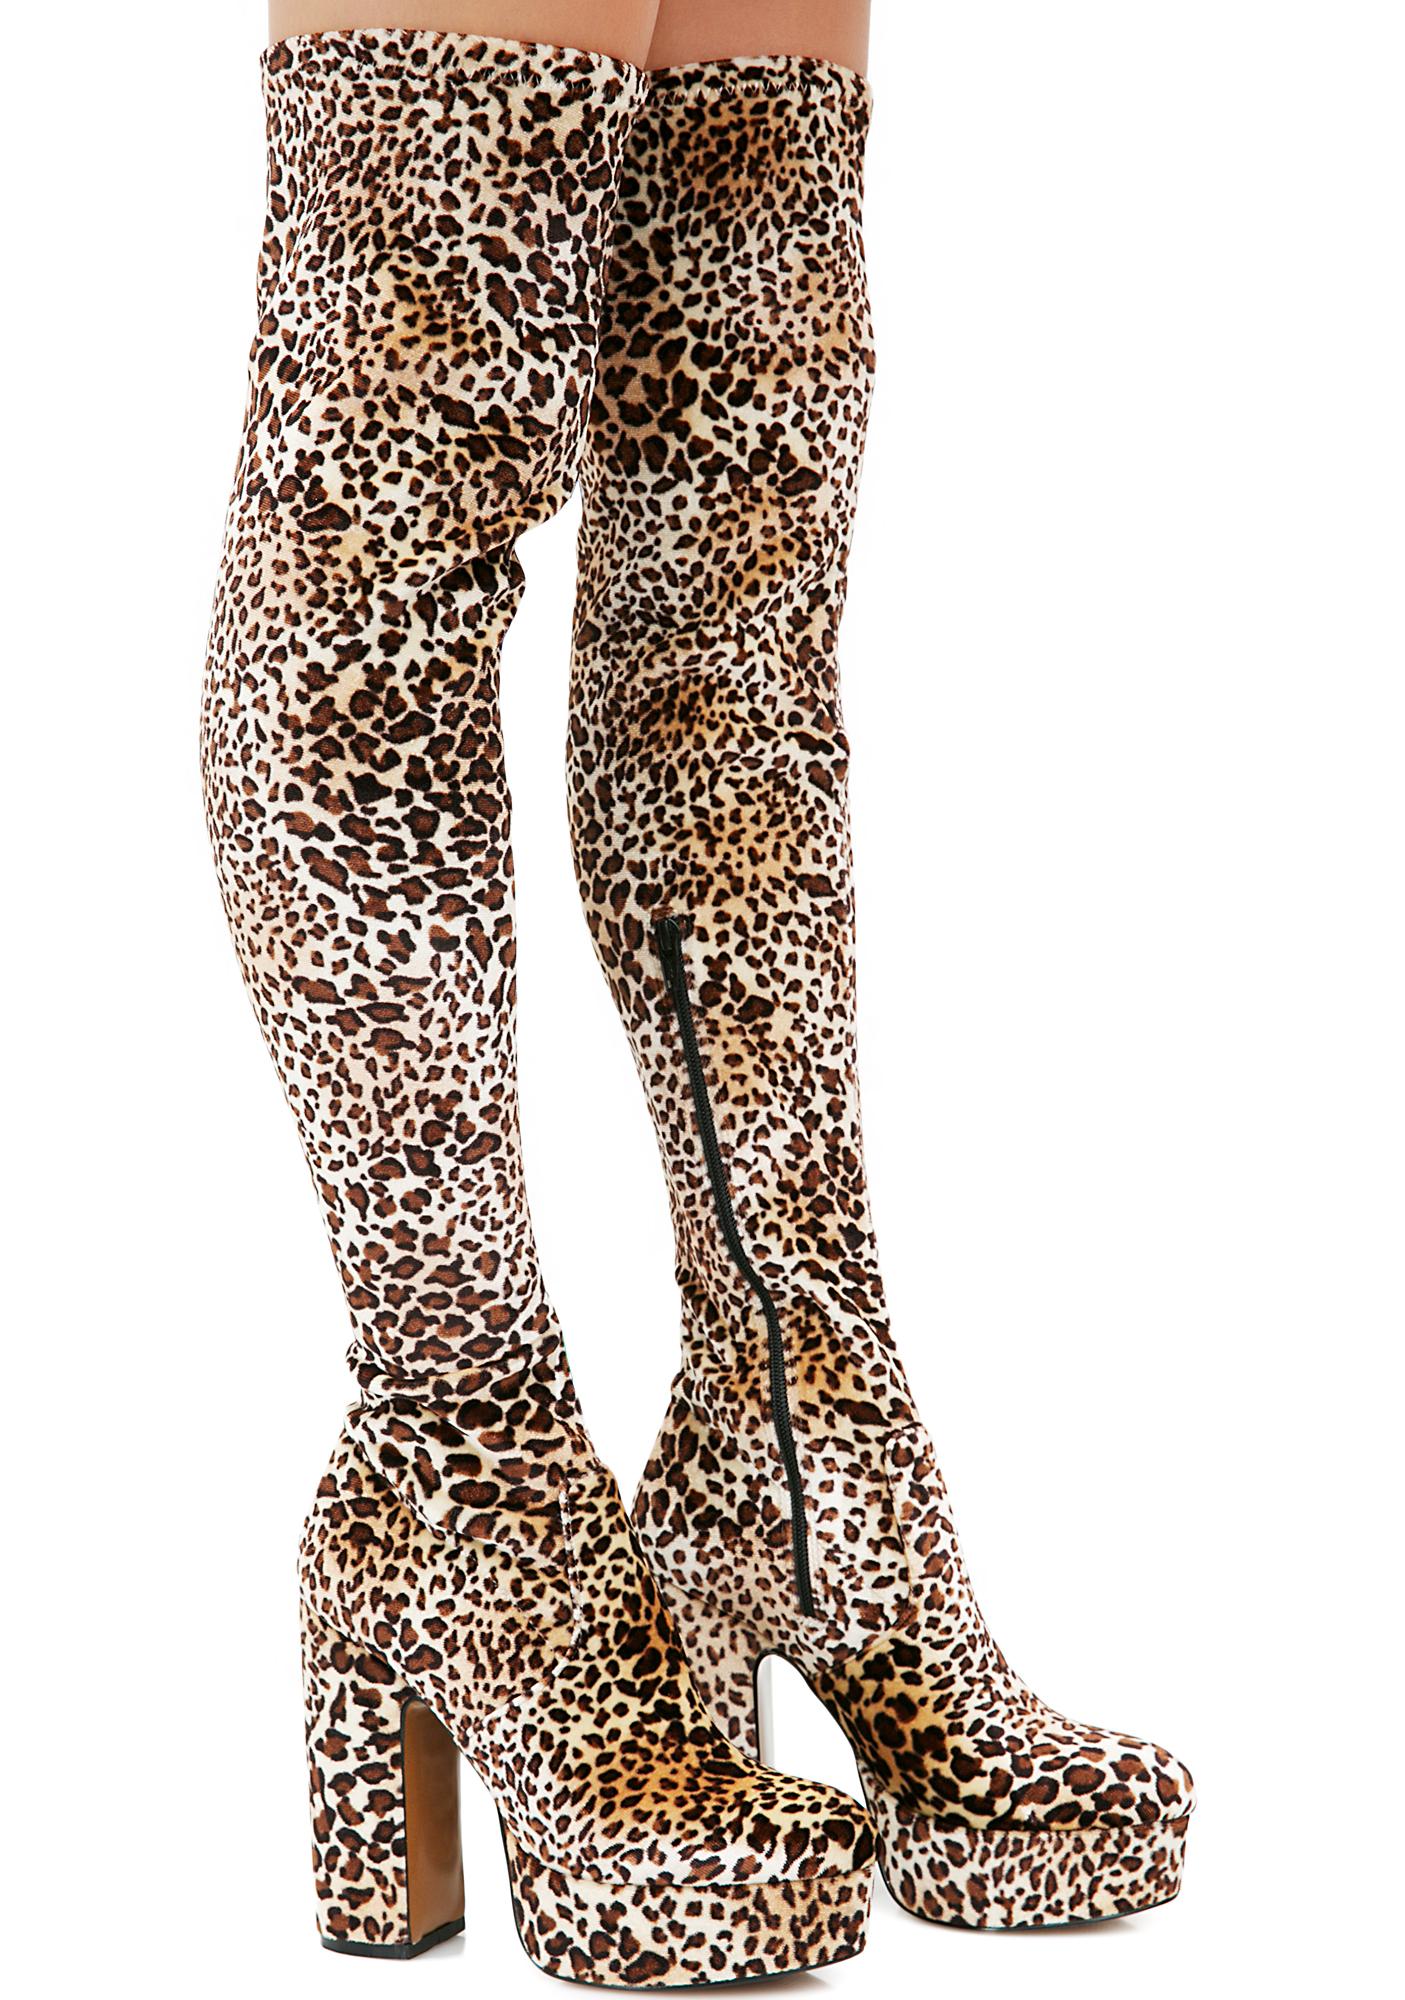 knee high cheetah boots